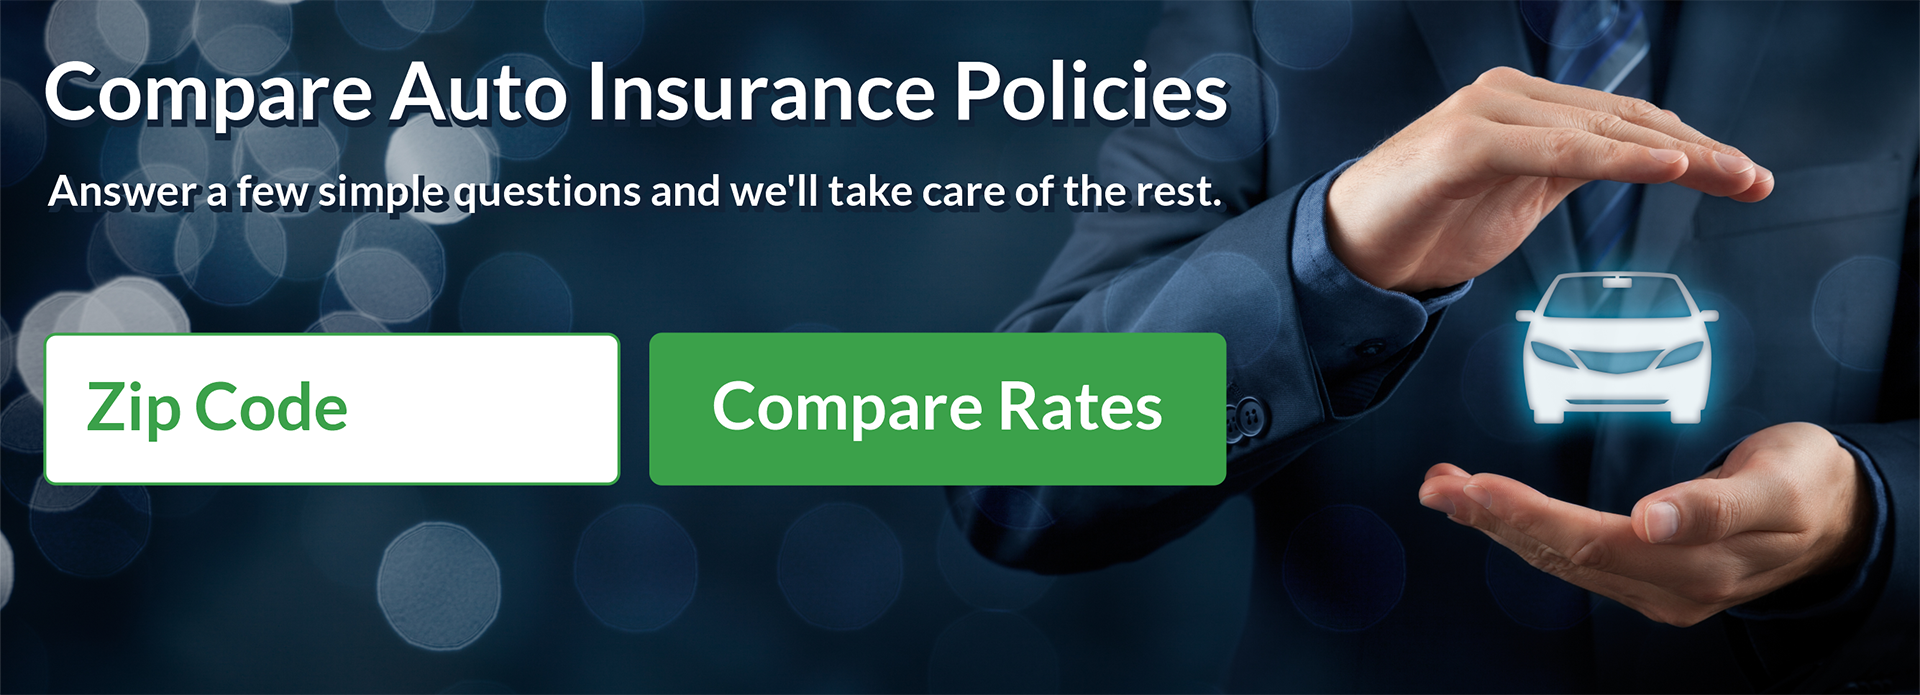 MW - Compare Auto Insurance PoliciesV2.png